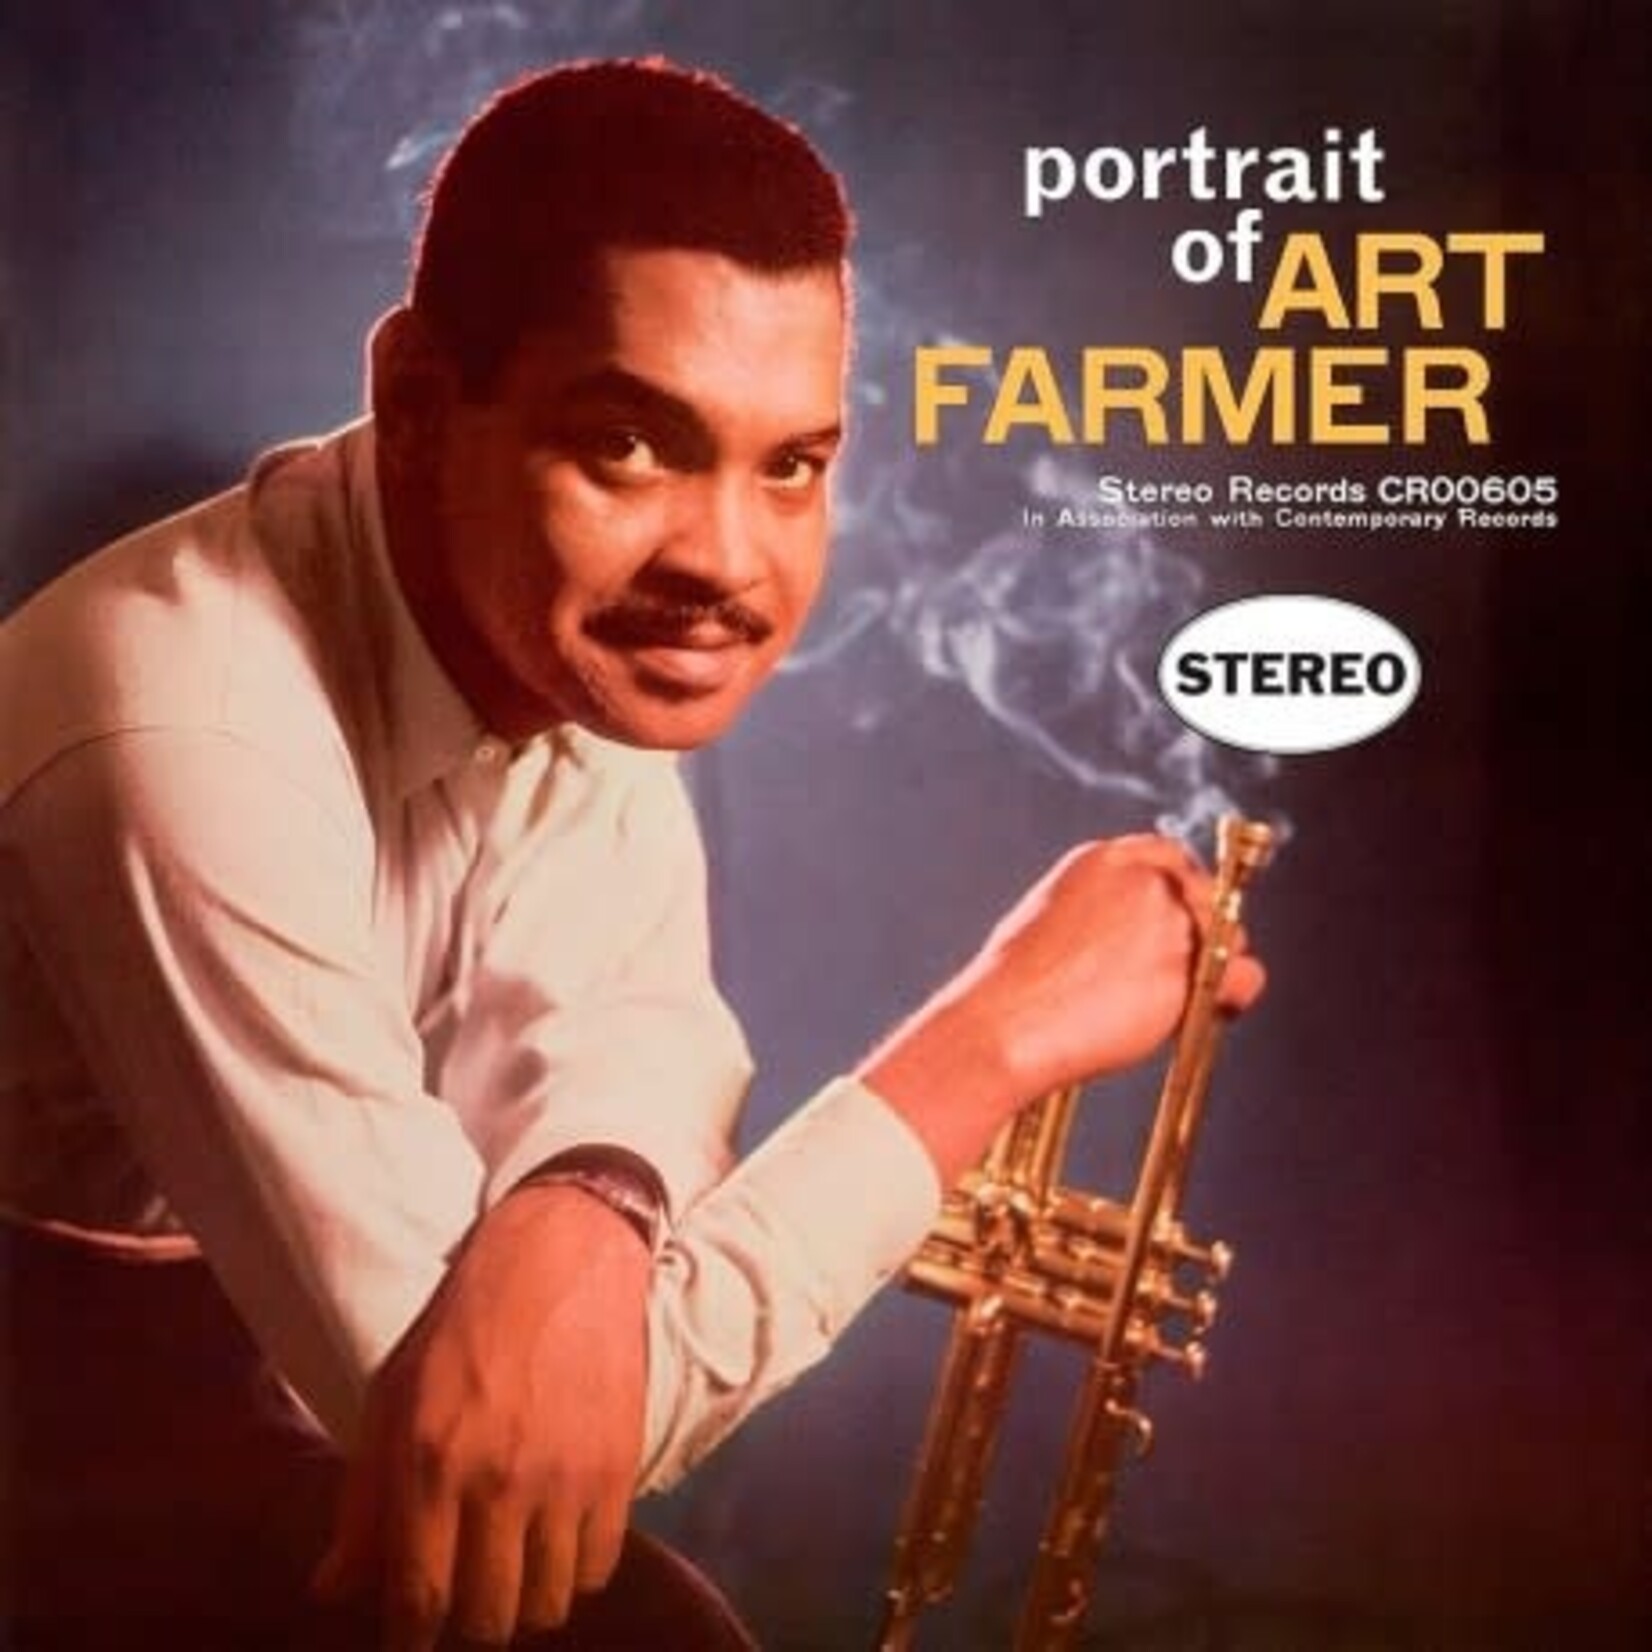 [New] Art Farmer - Portrait Of Art Farmer (Contemporary Records Acoustics Sounds Series)